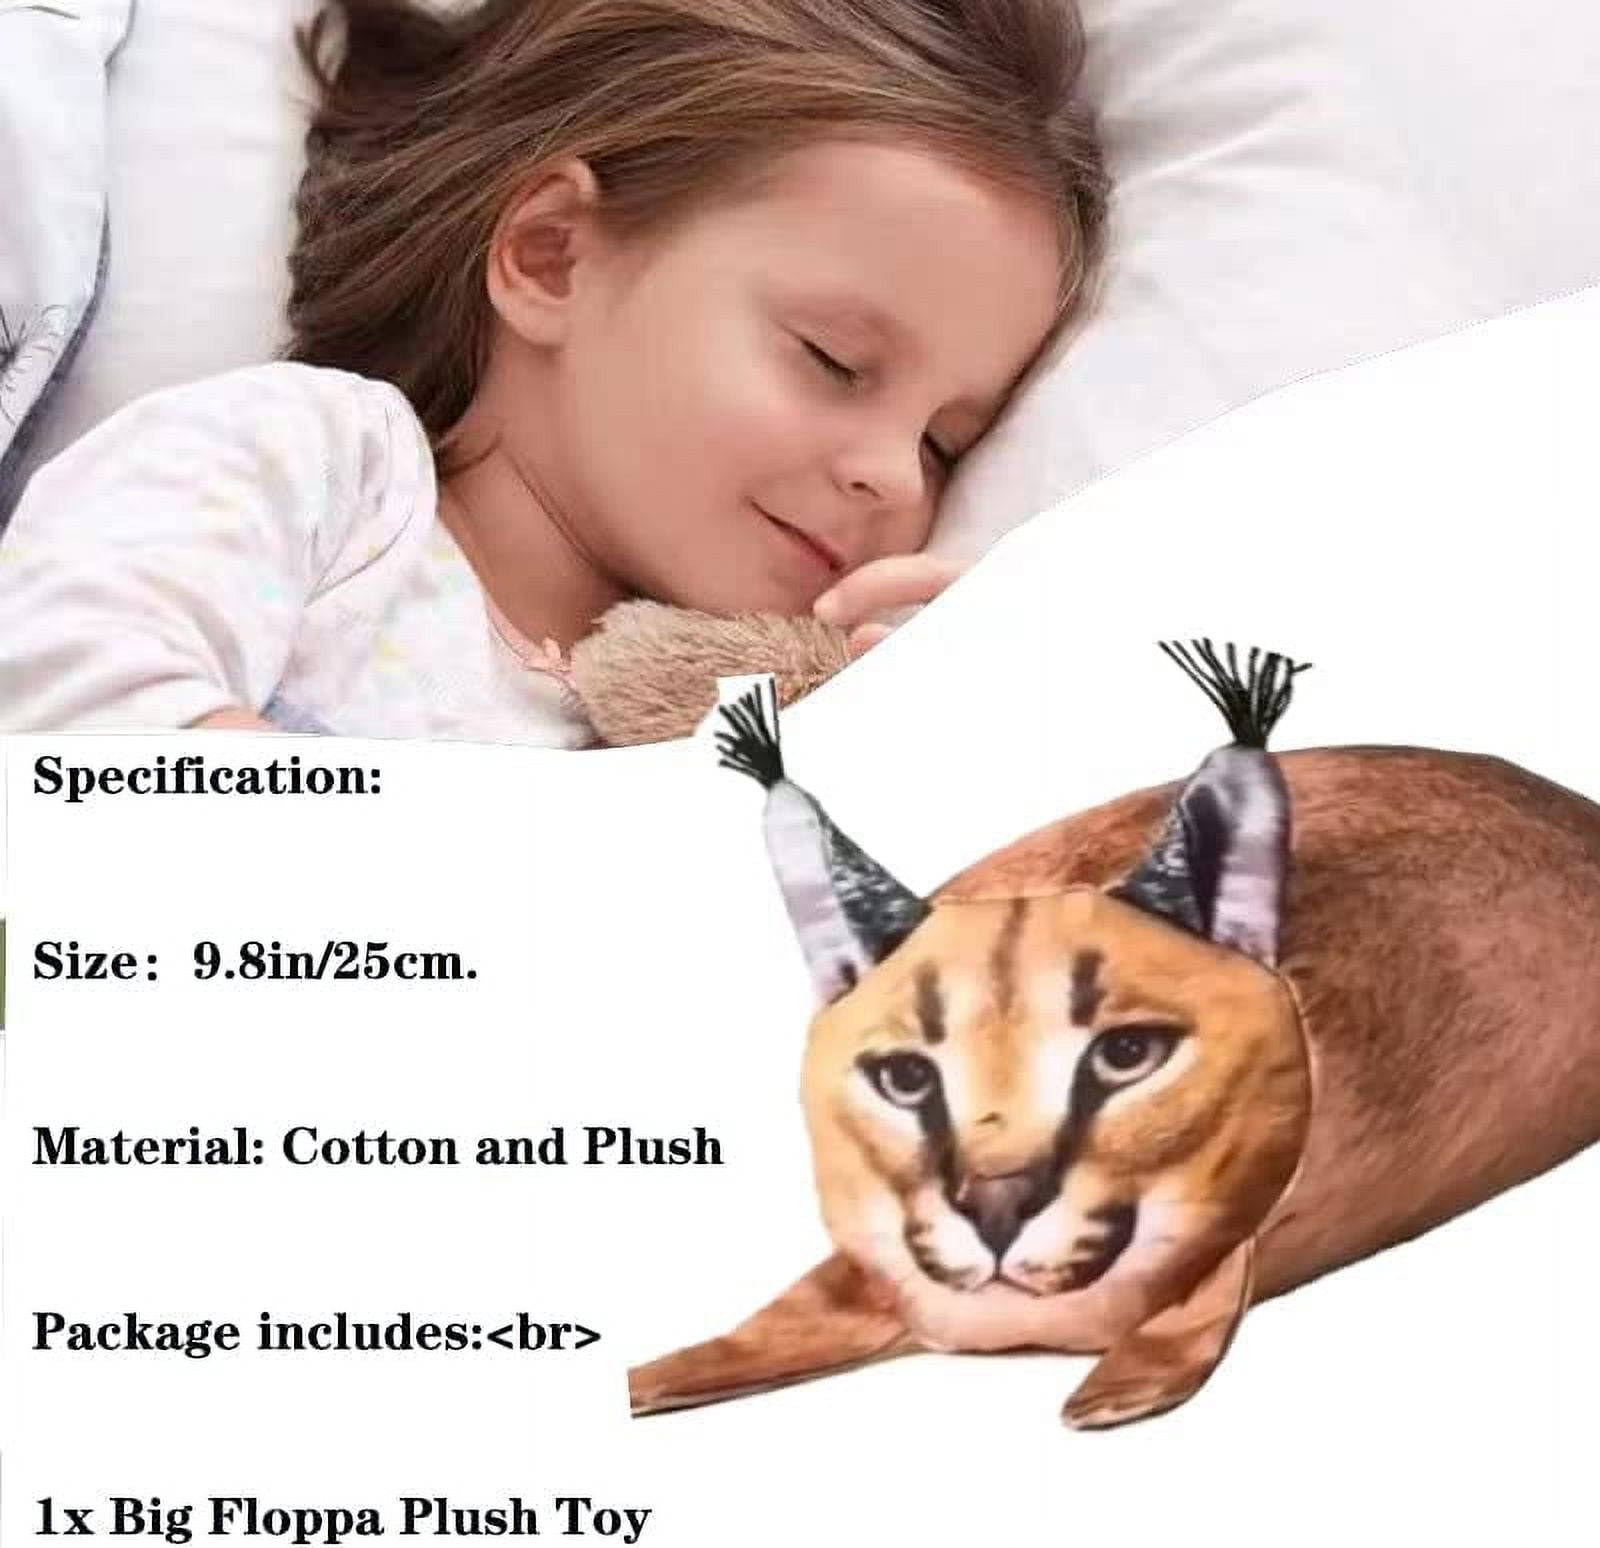 Floppa Plush,Floppa Toy Plush Stuffing,7.5 Inches Big Floppa Plush Cartoon  Cat Plush Toy,Soft and Cute Animal Plush Toy,Birthday Party Gifts for  Kids（1pcs） in 2023